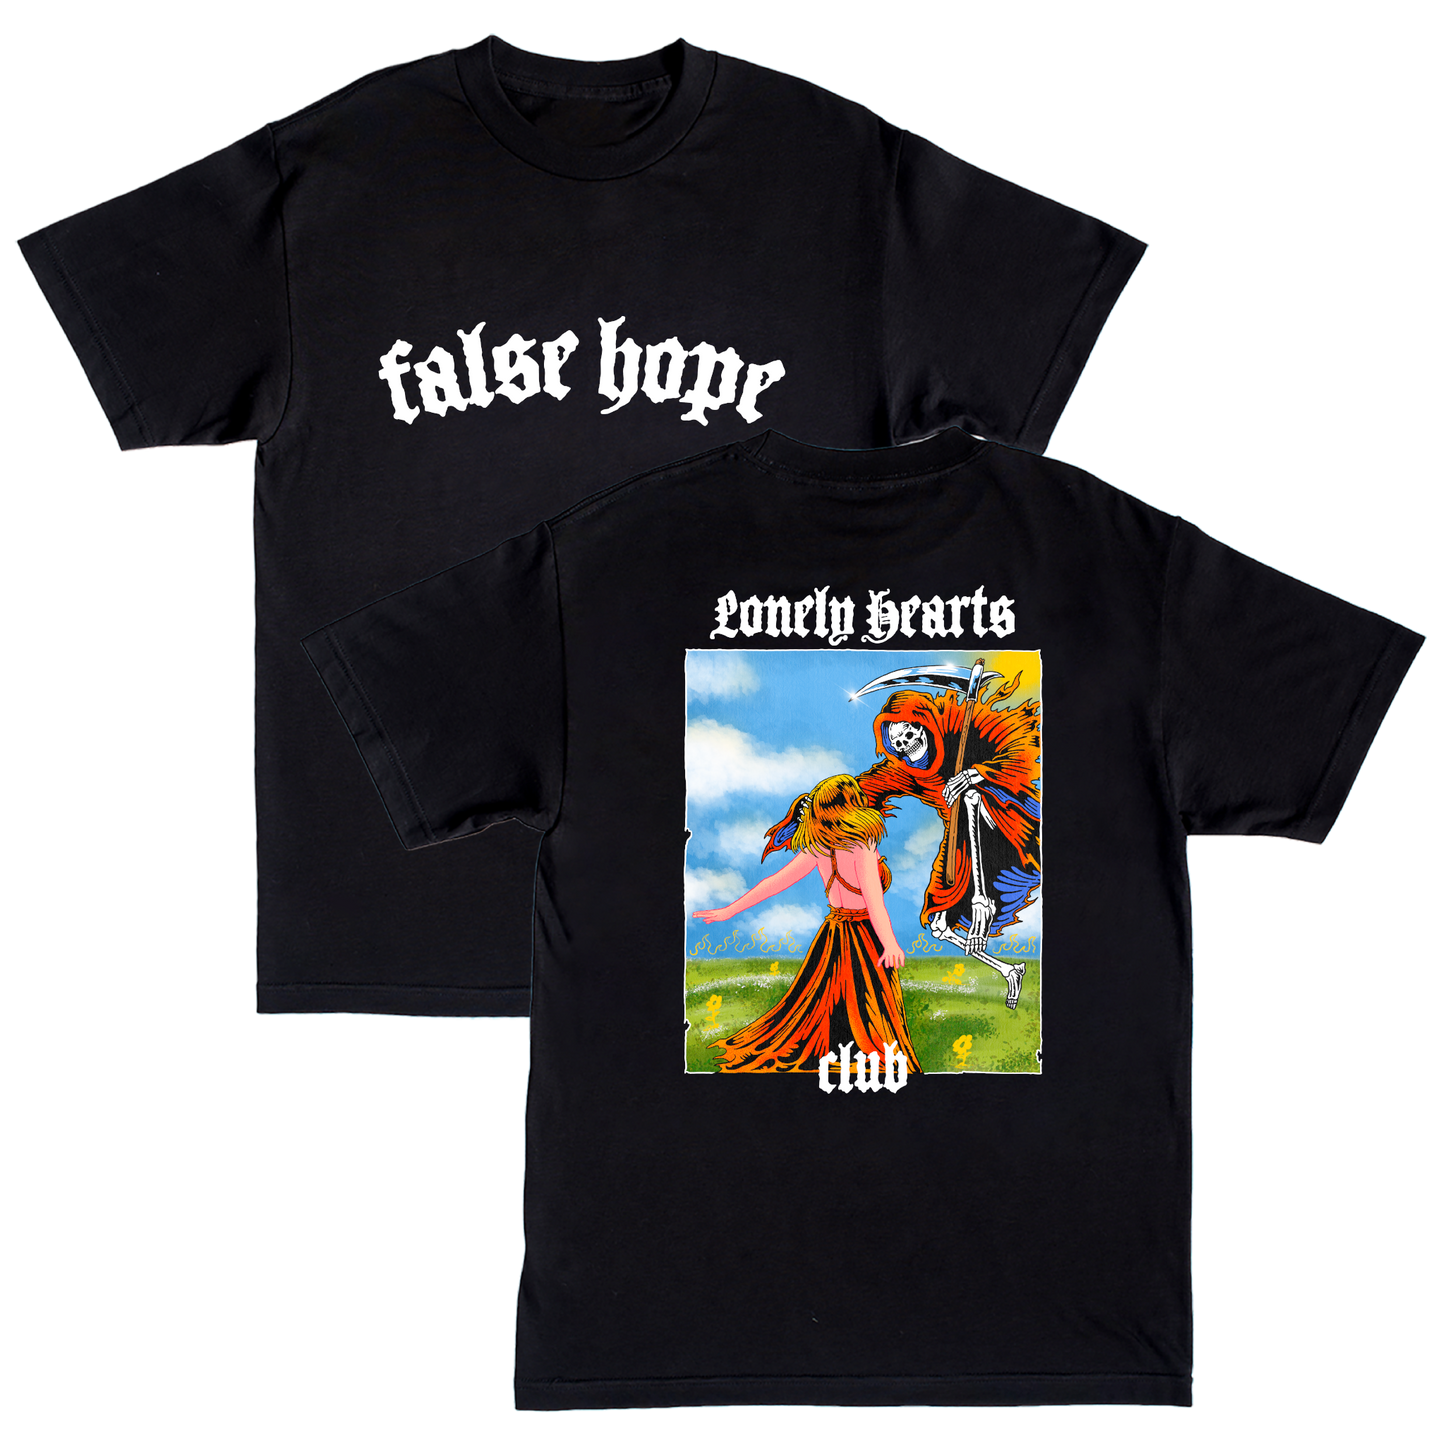 False Hope T-Shirt